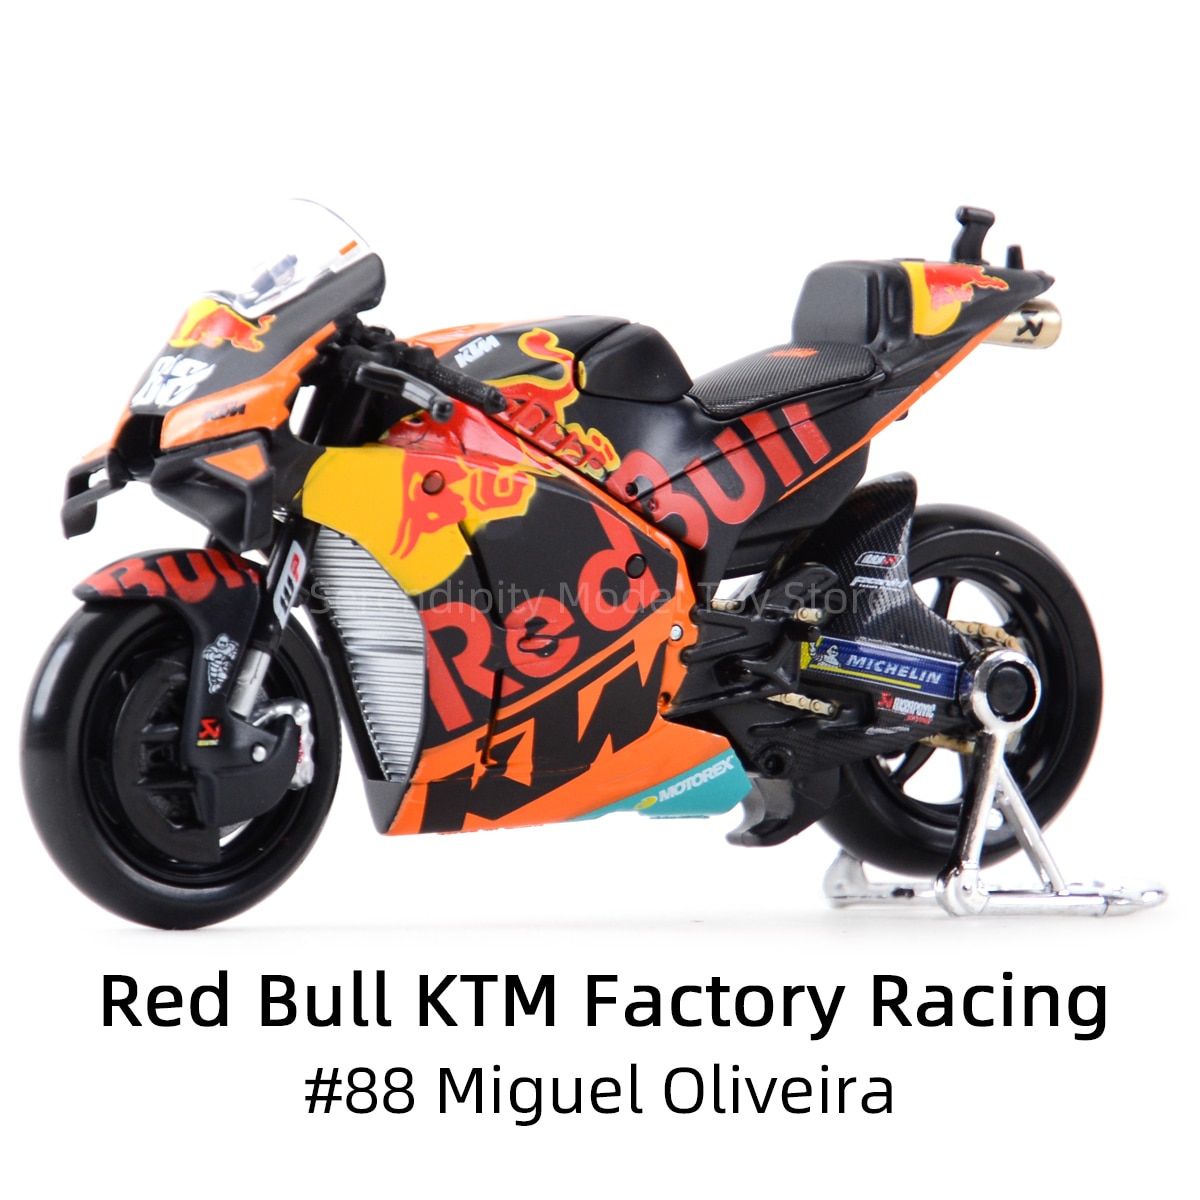 Miniatura Moto Red Bull KTM Factory Racing